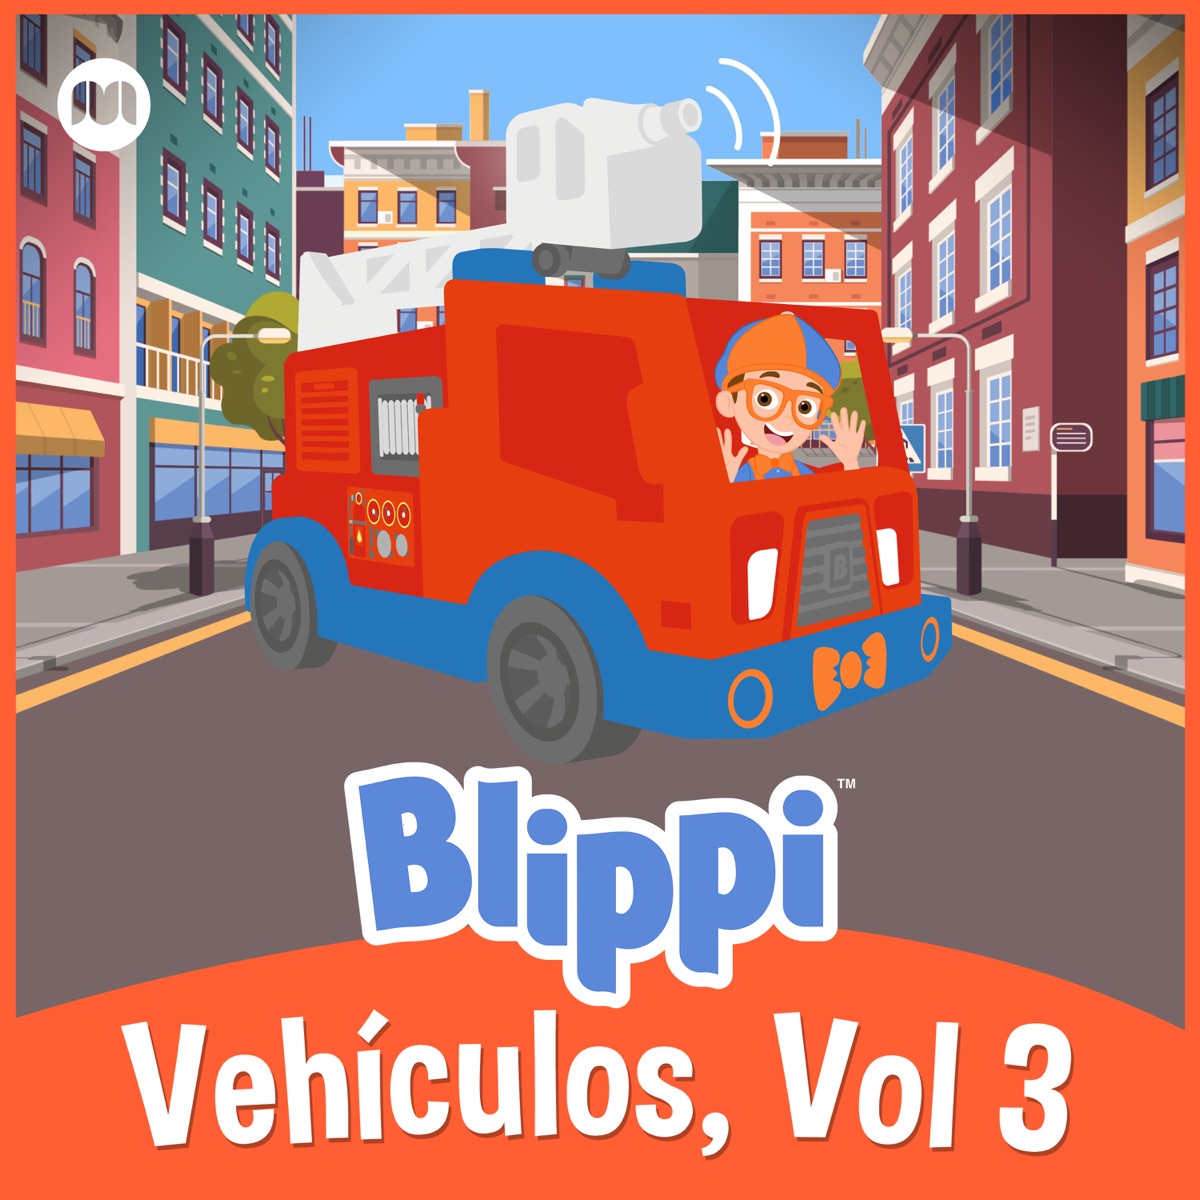 Vamos Jogar Futebol - Single — álbum de Blippi em Português — Apple Music